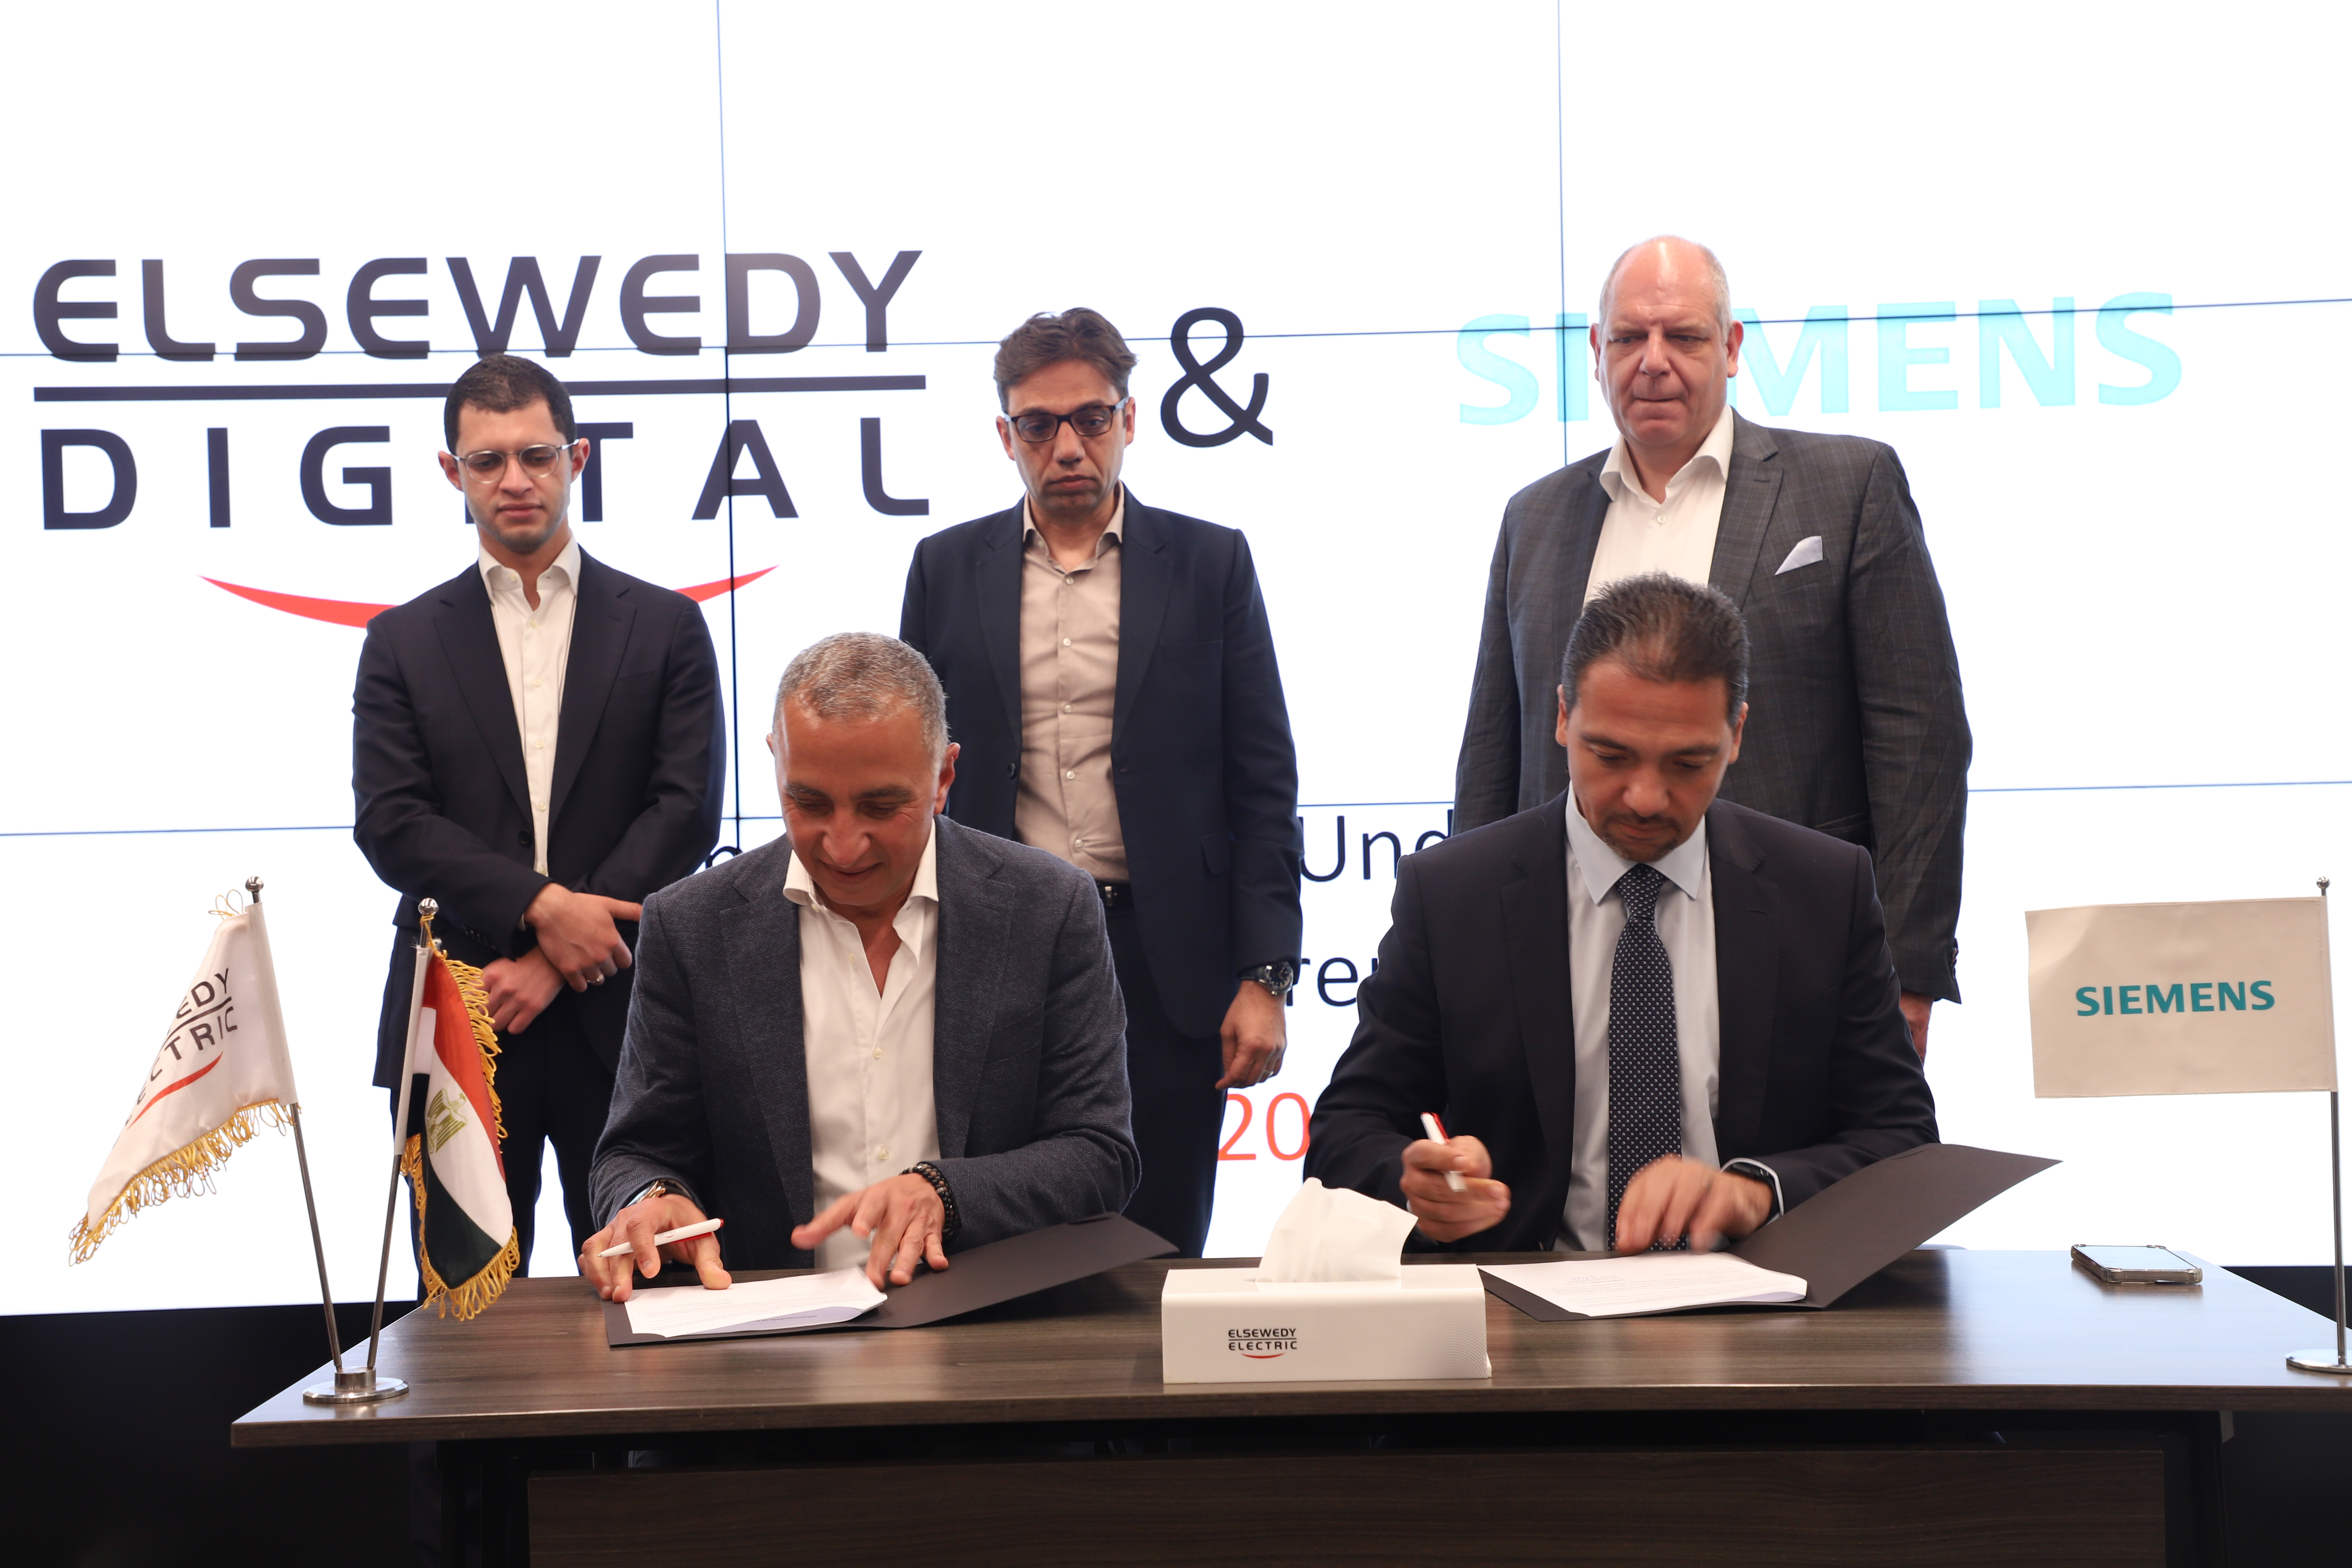 Siemens and Elsewedy Digital team up to enhance digitalization across Egypt